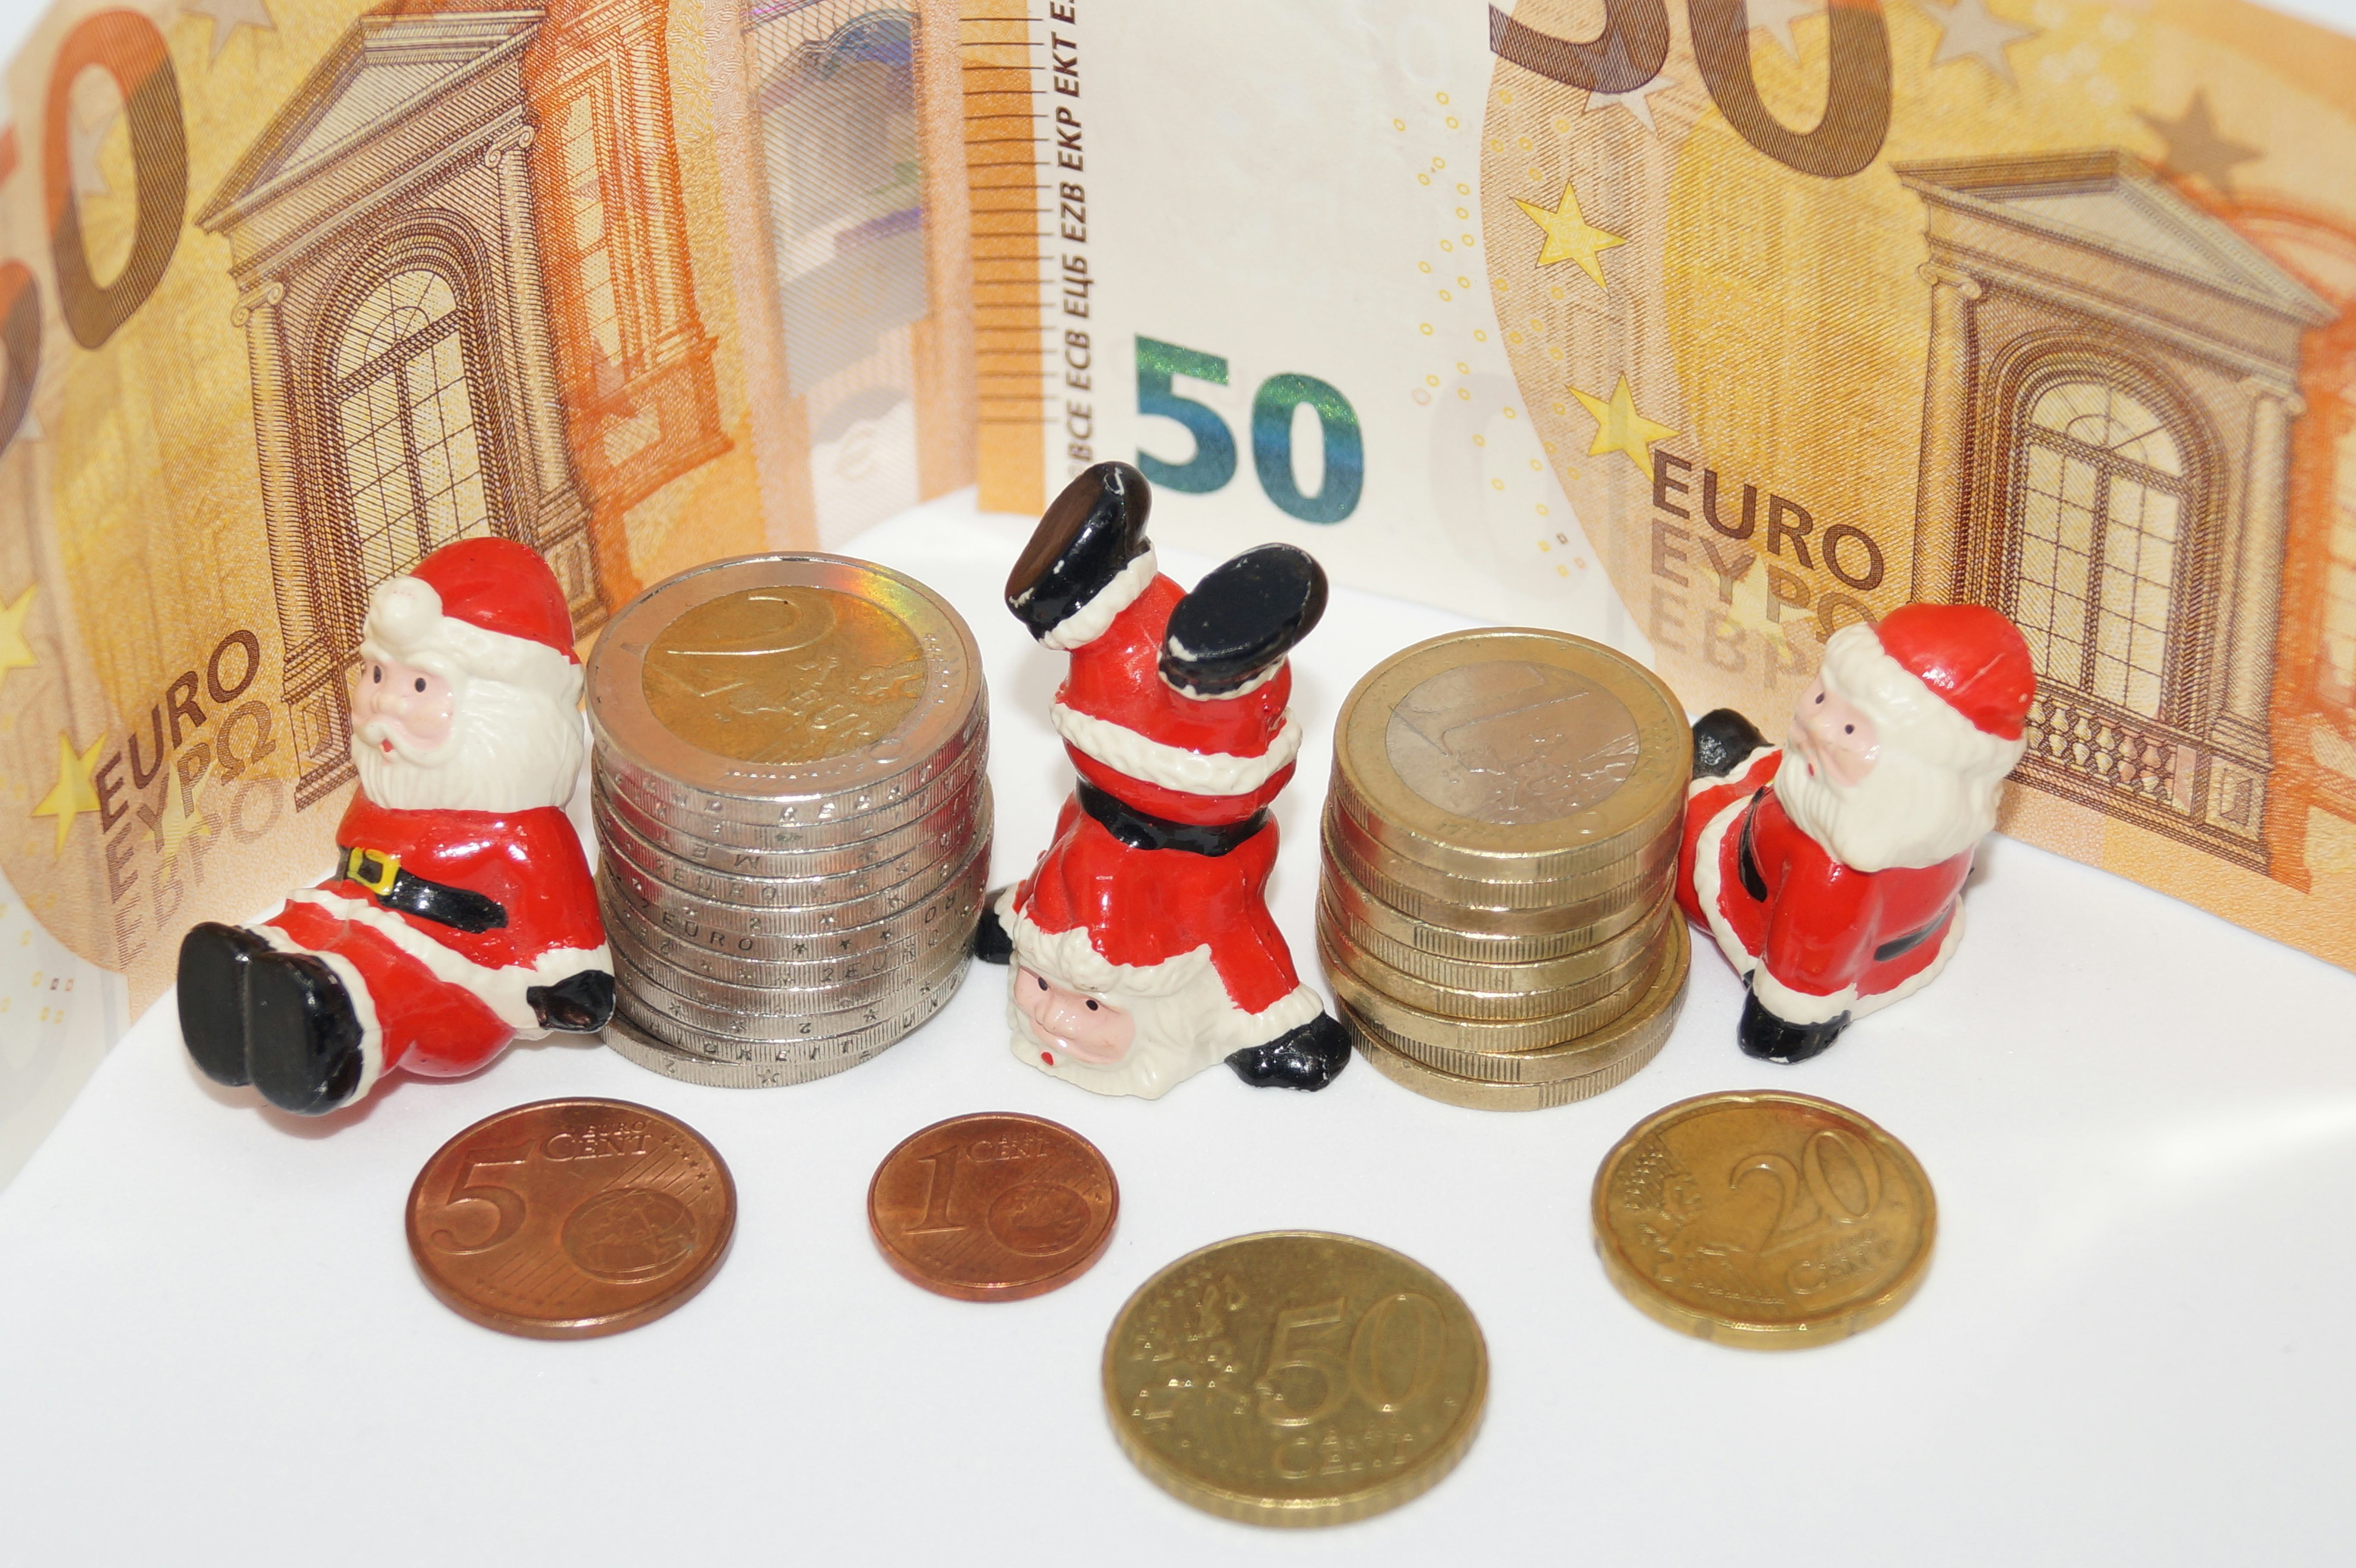 Restaurant Vandaag: vroegboekkorting van 10 euro voor kerst 2017